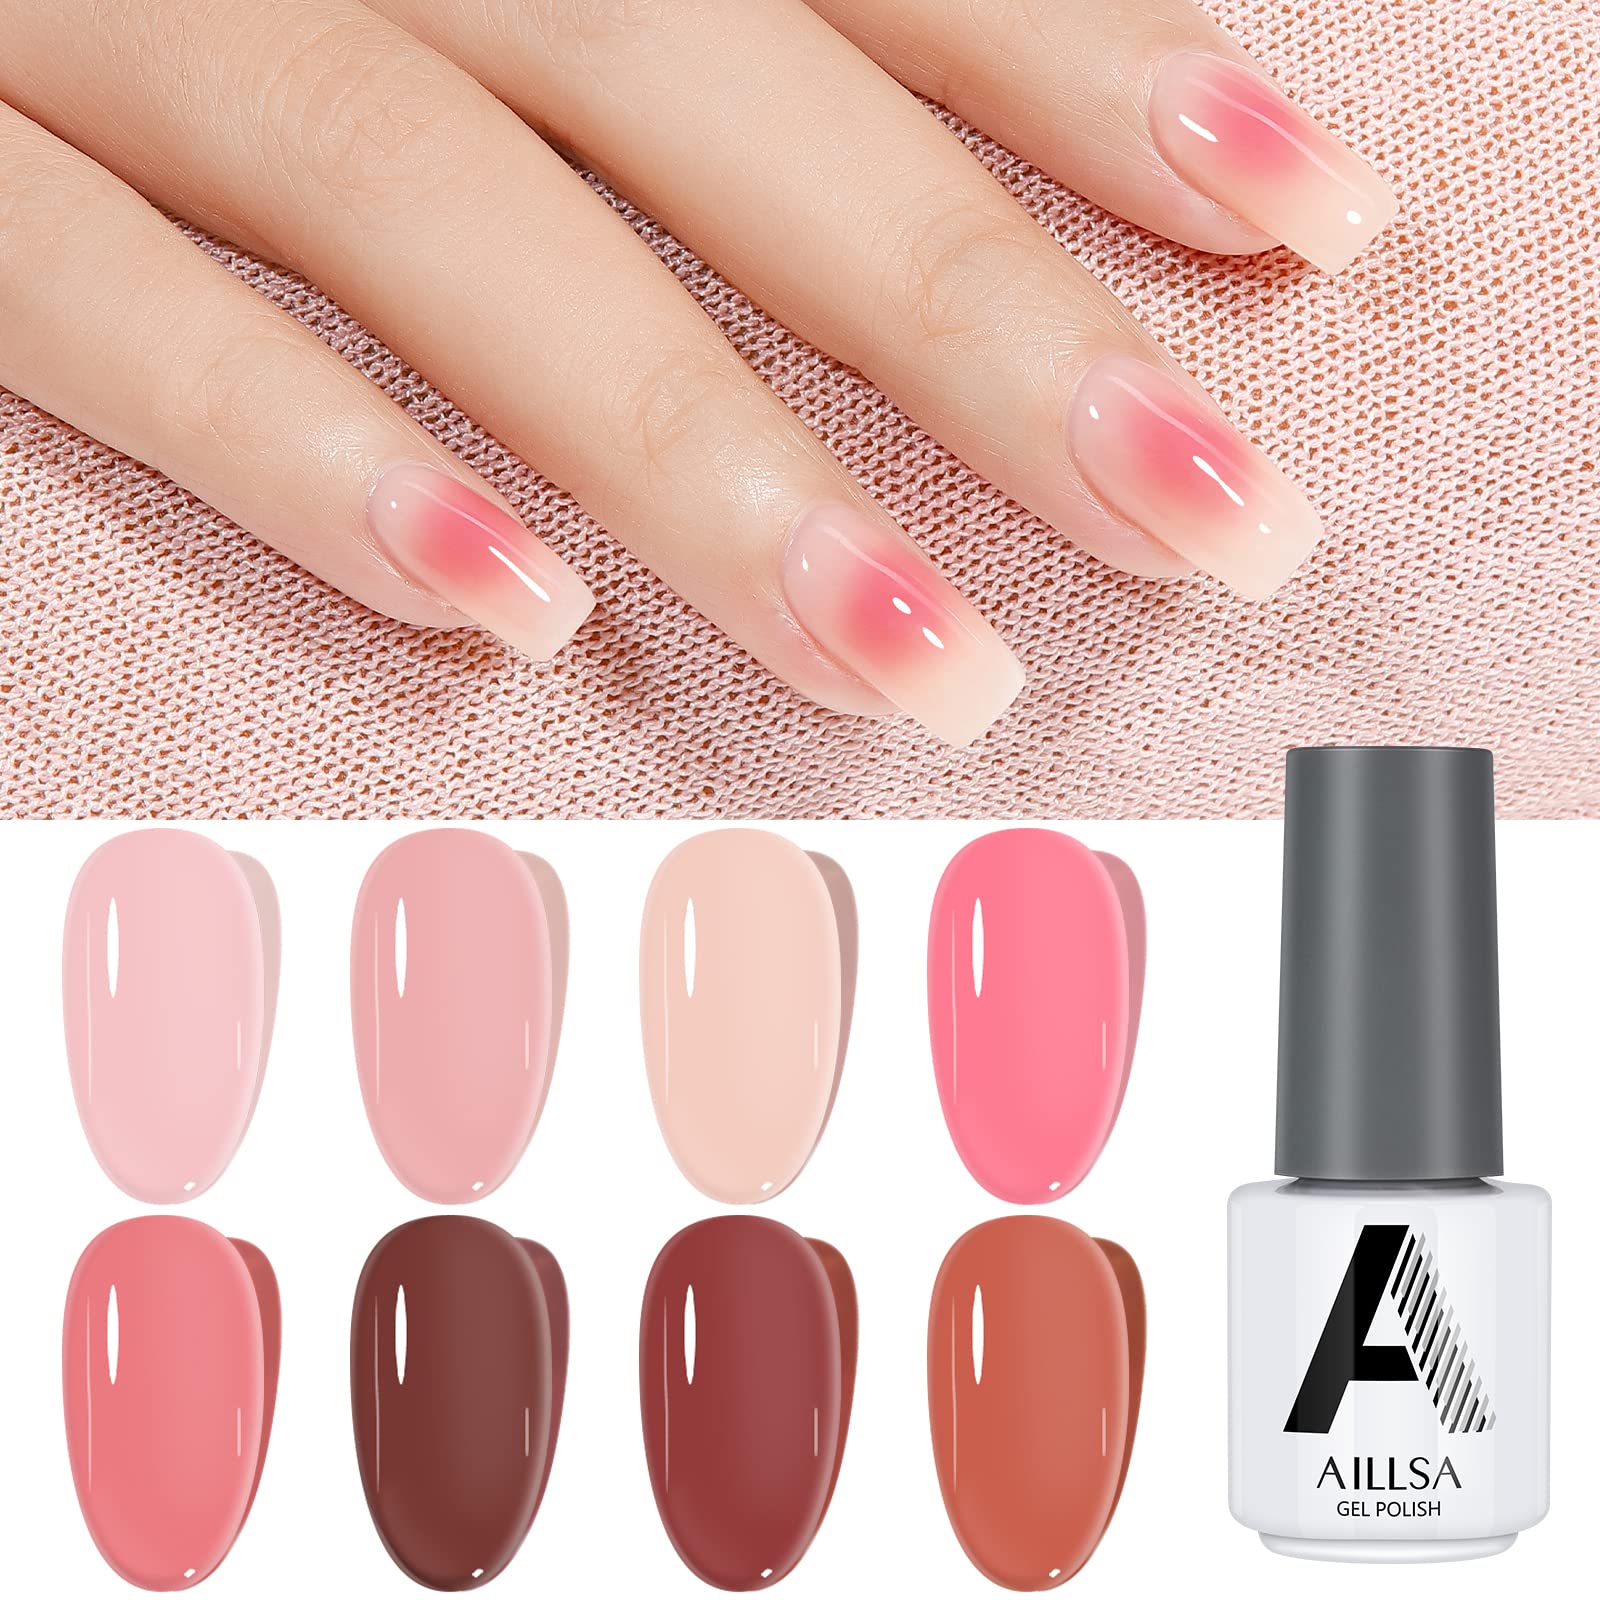 AILLSA Jelly Gel Nail Polish Set- Nude Polish Sheer Blush Pink Gel